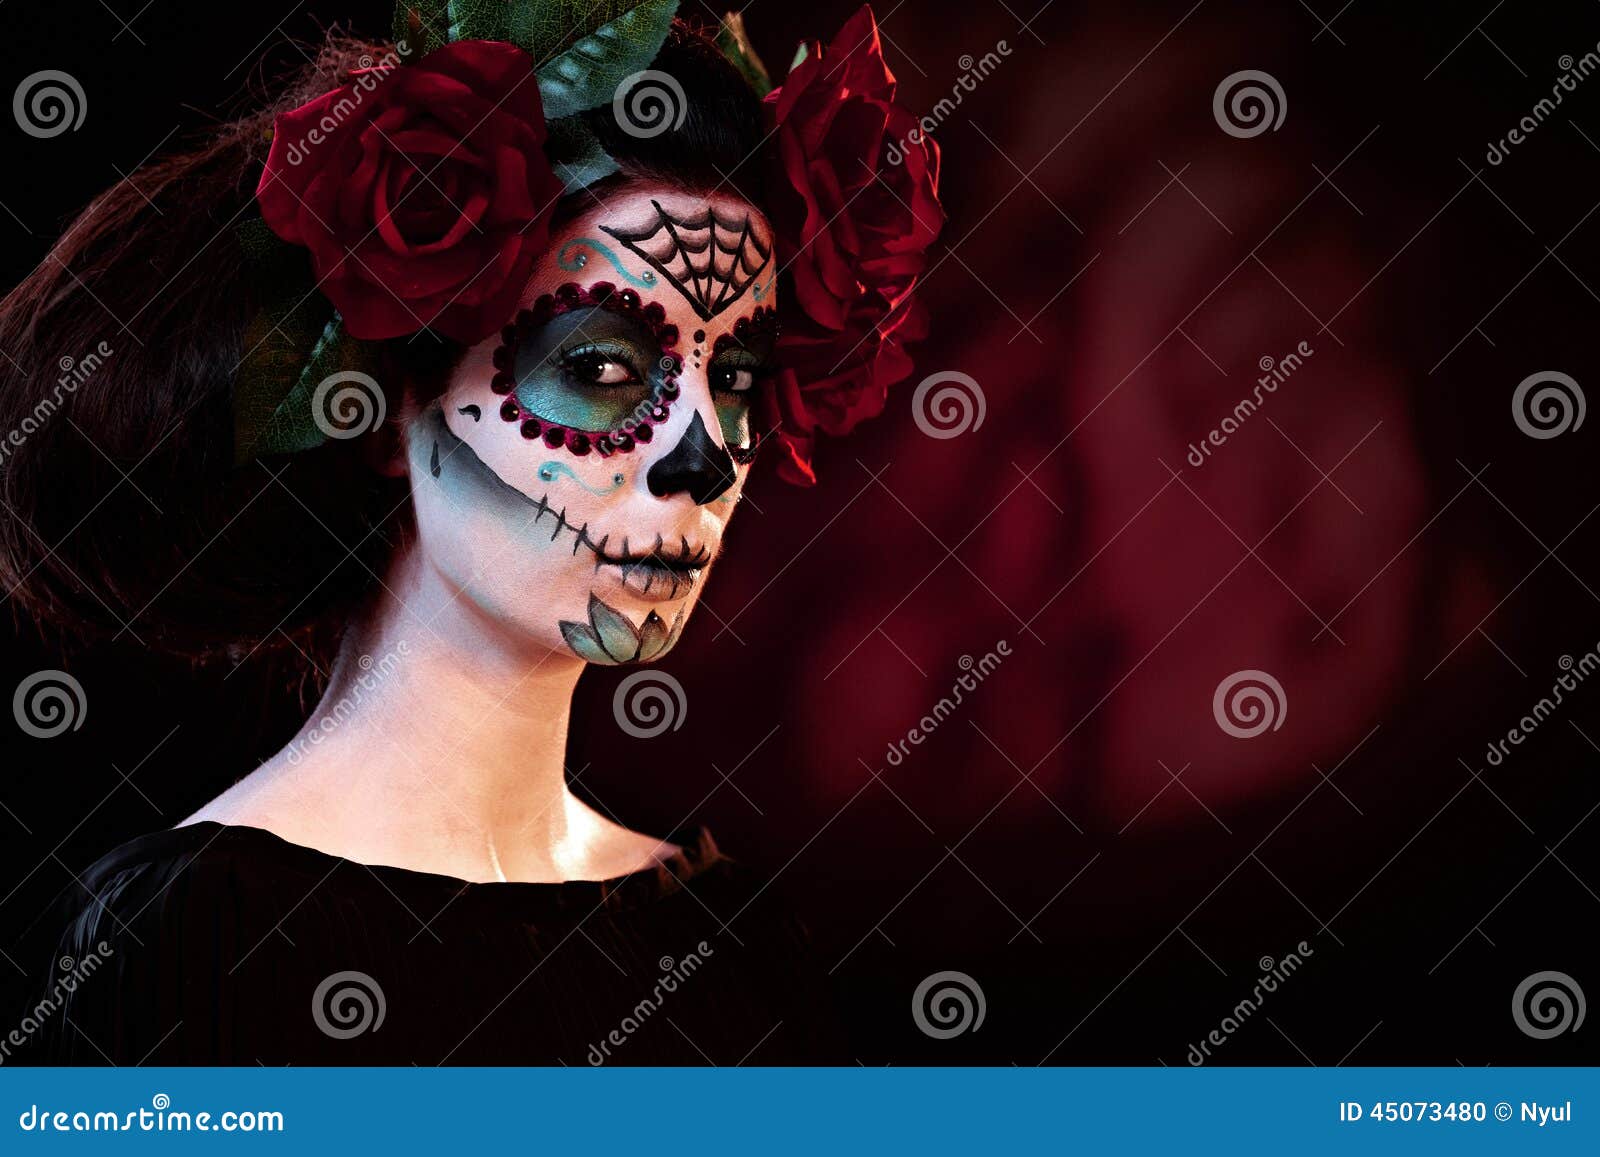 halloween makeup santa muerte mask